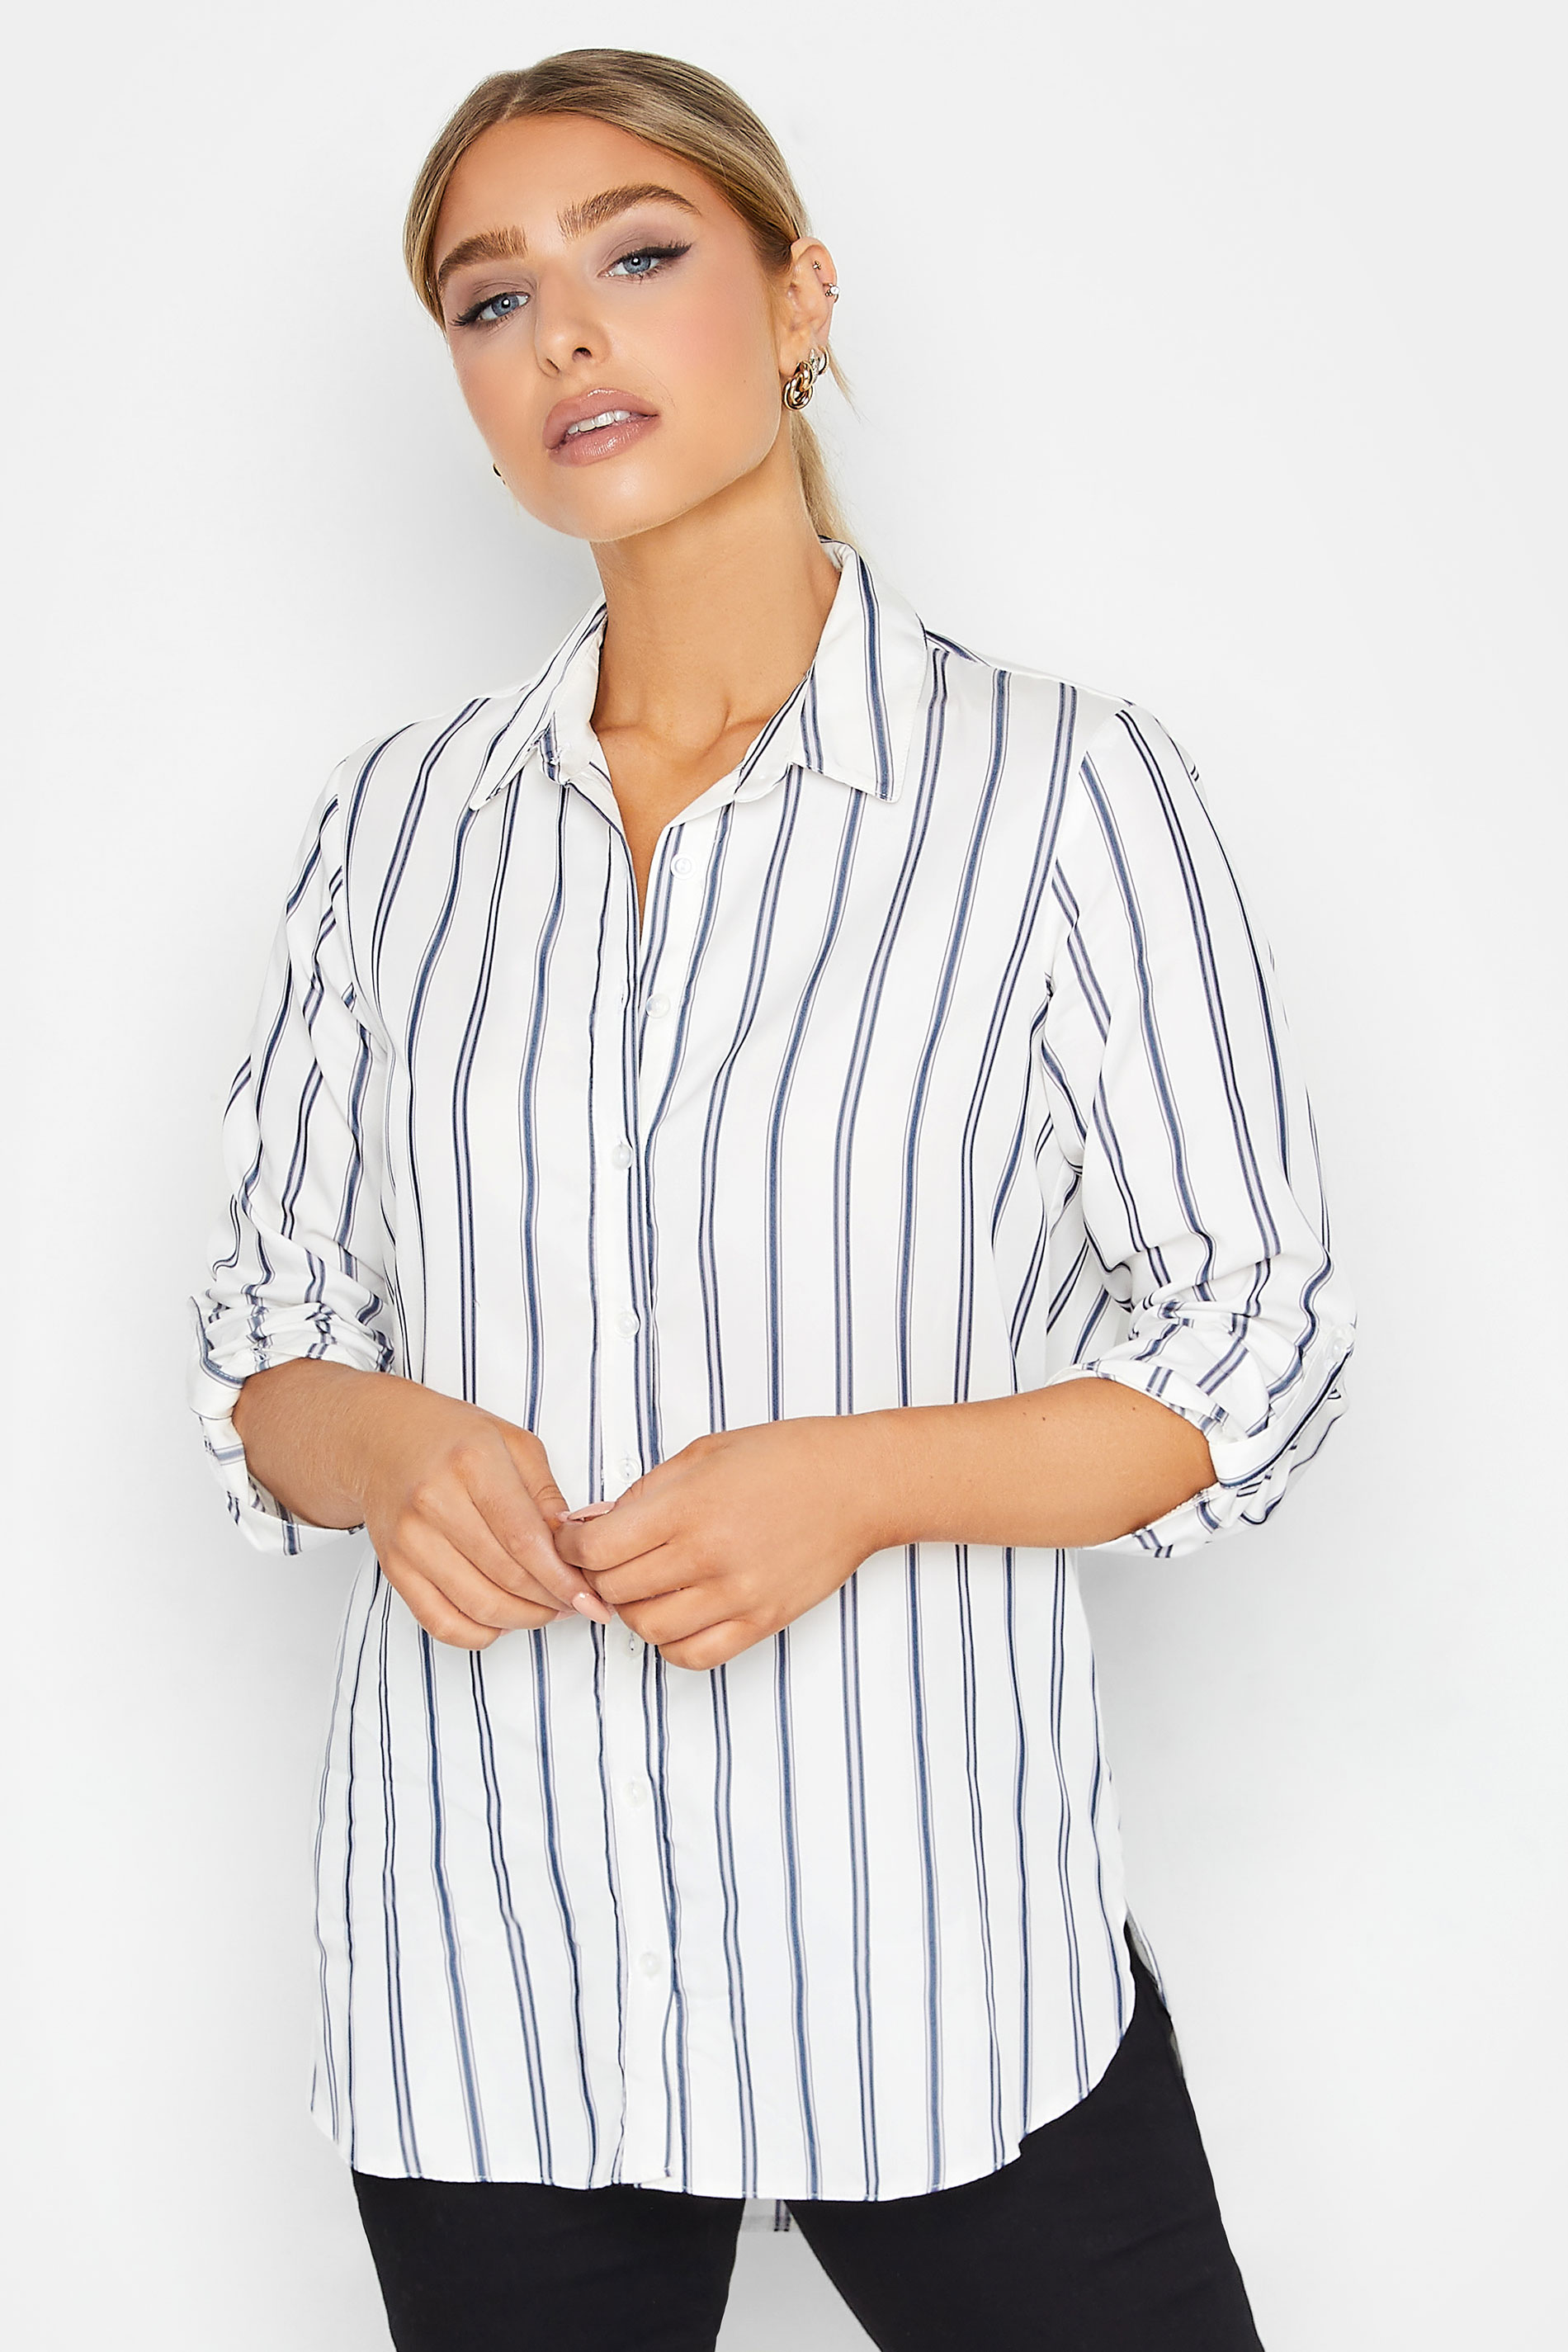 M&Co White & Navy Blue Stripe Tab Sleeve Shirt | M&Co 1